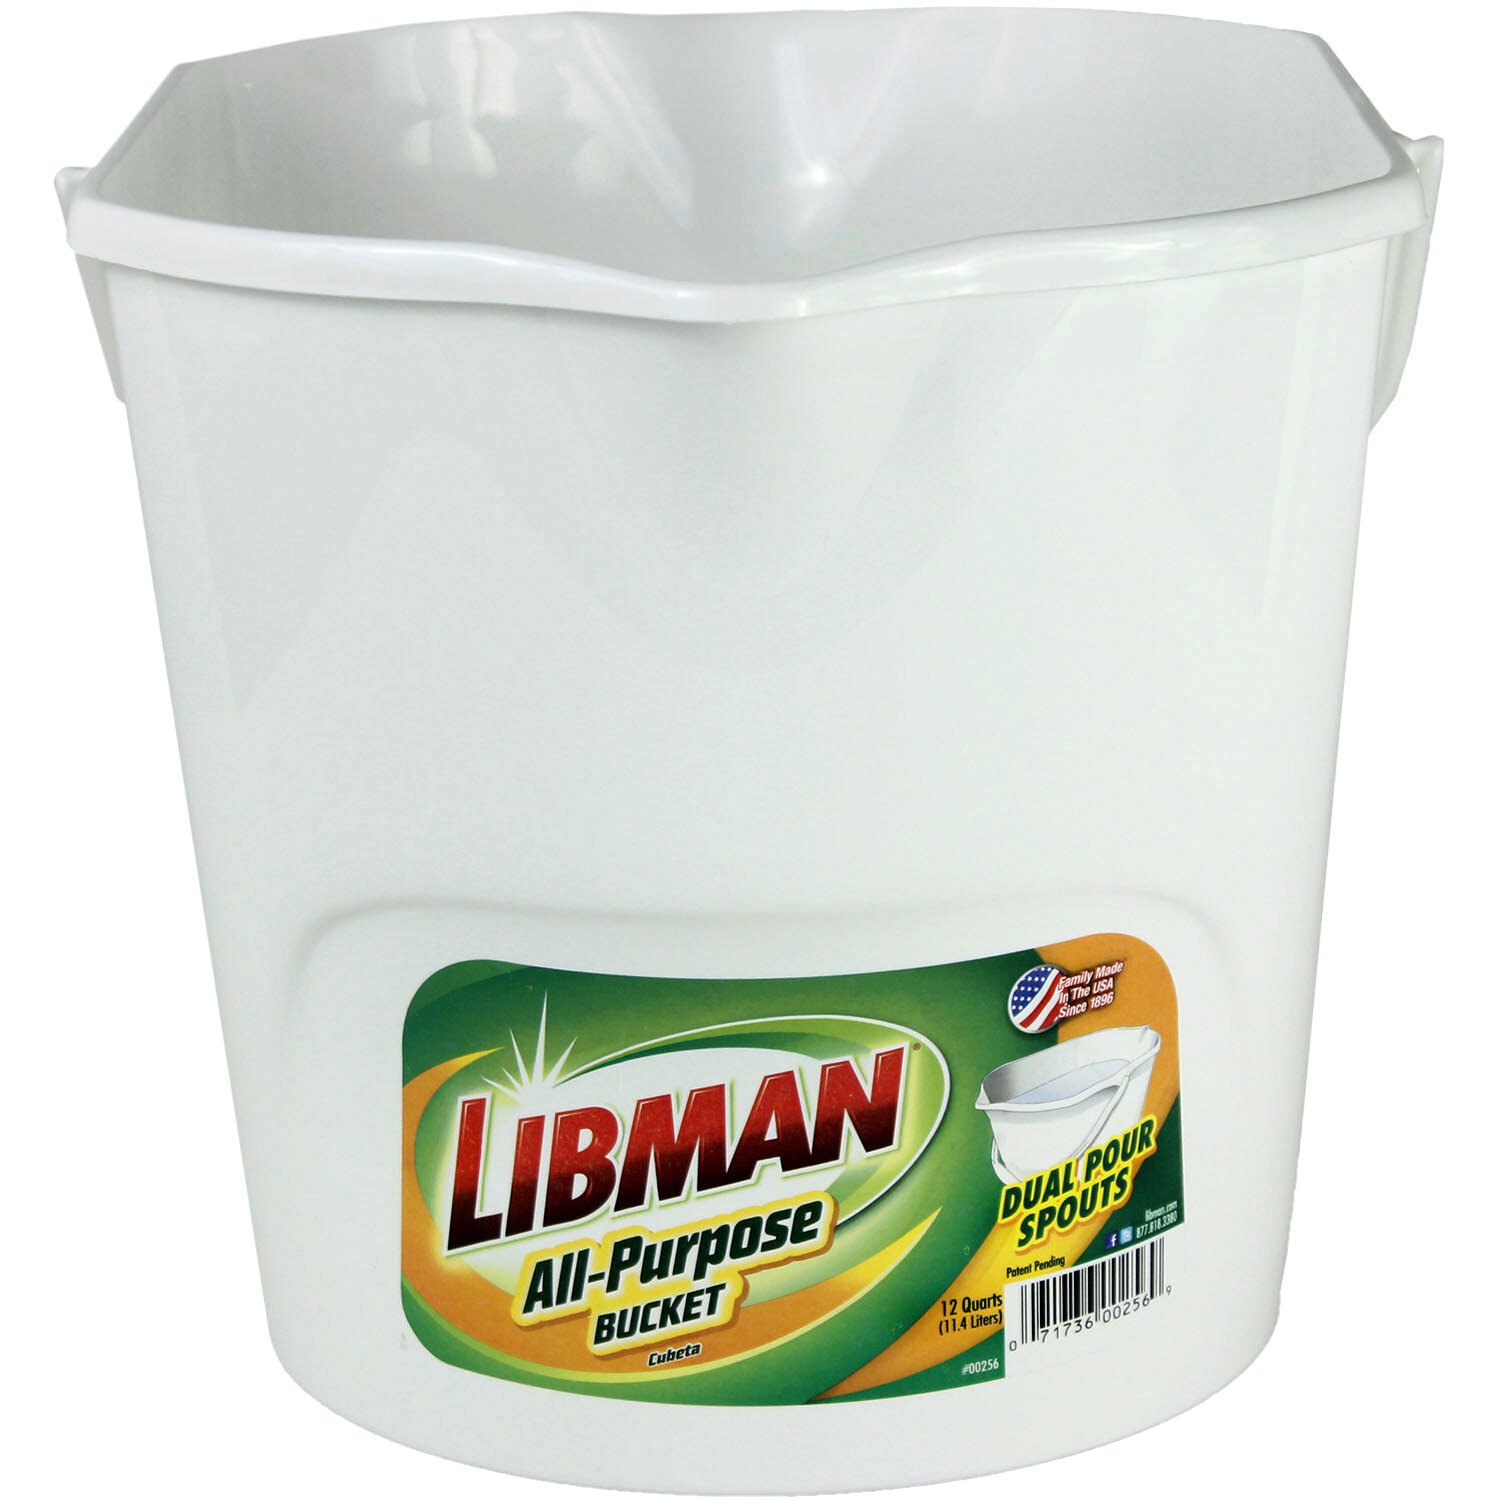 Libman 4 Gal Black Bucket